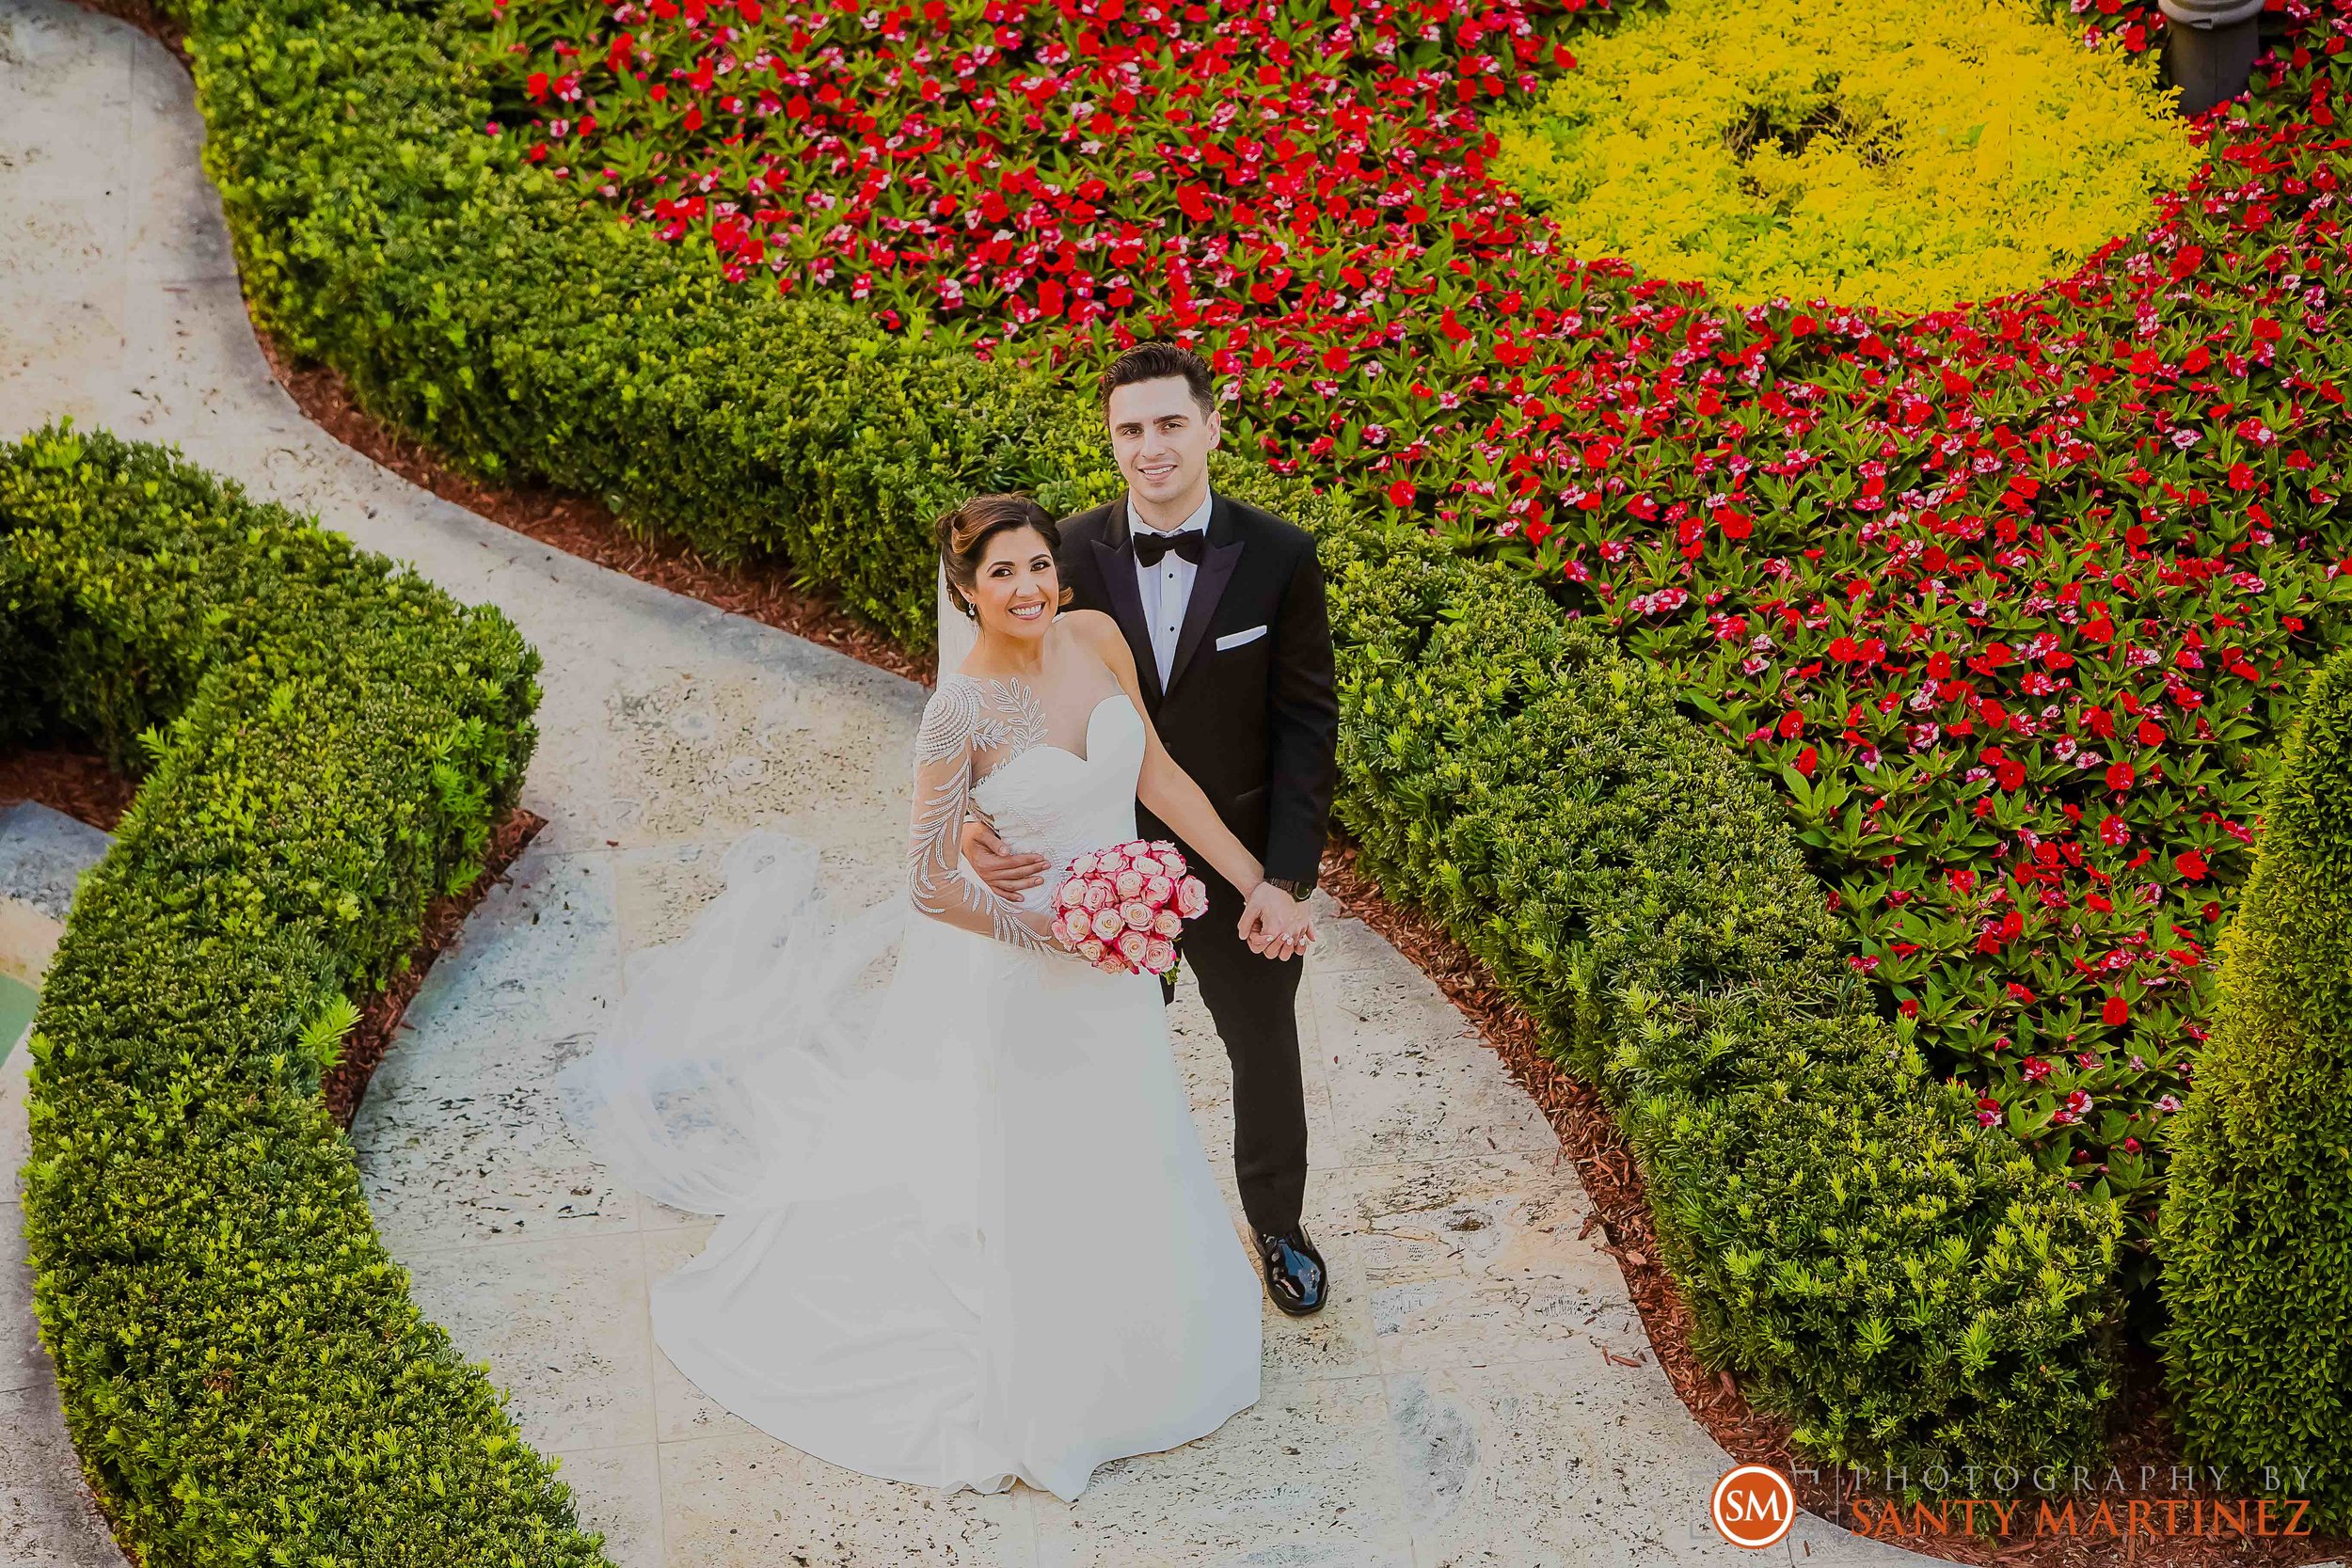 Wedding Trump National Doral Miami - Santy Martinez Photography-15.jpg